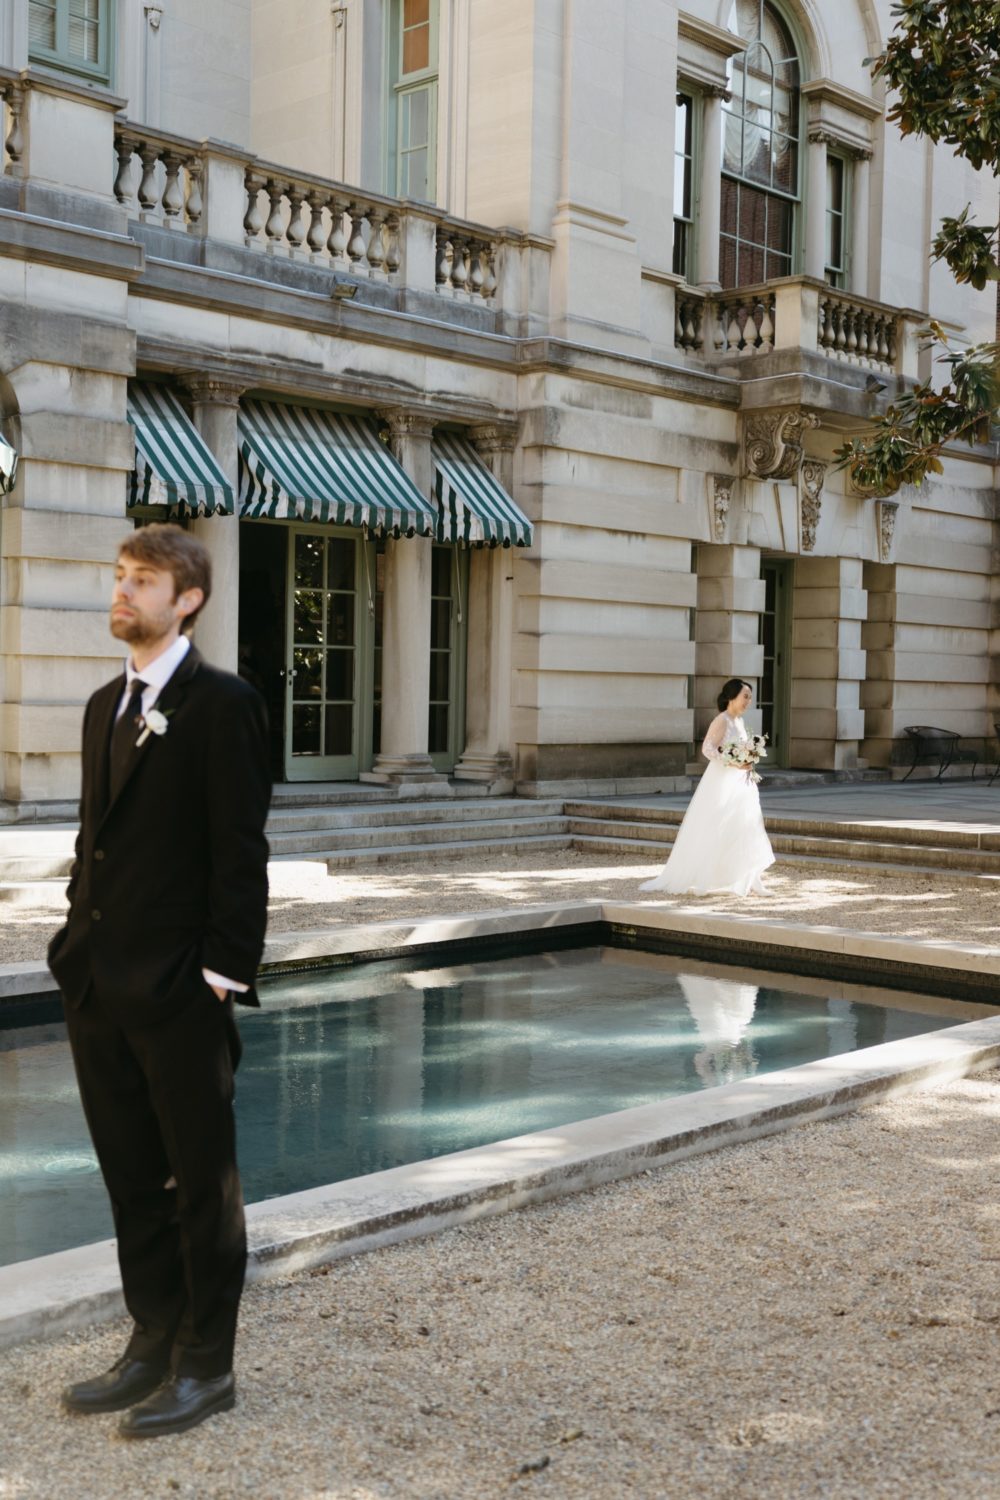 courtyard bride and groom first look black tux wedding dress